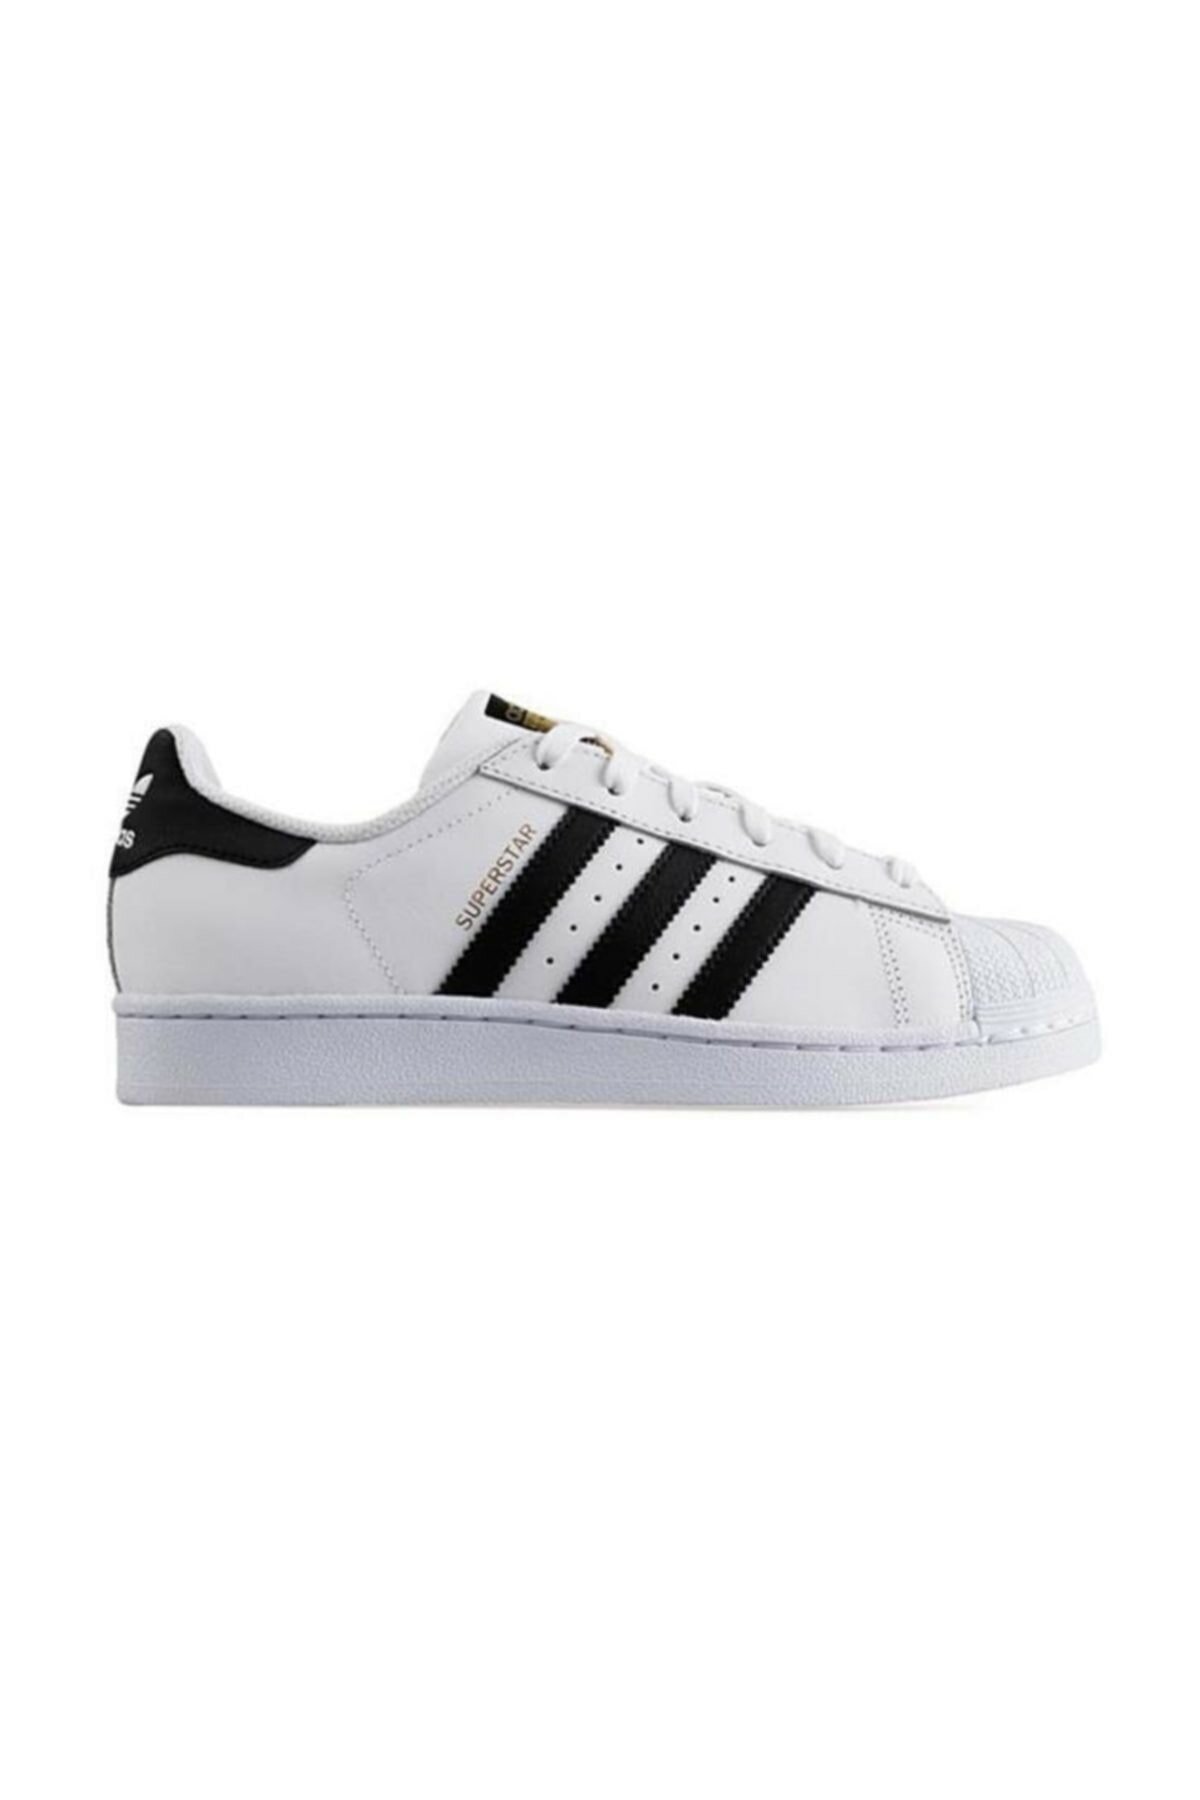 Adidas Originals Superstar  Unisex Spor Ayakkabı Beyaz